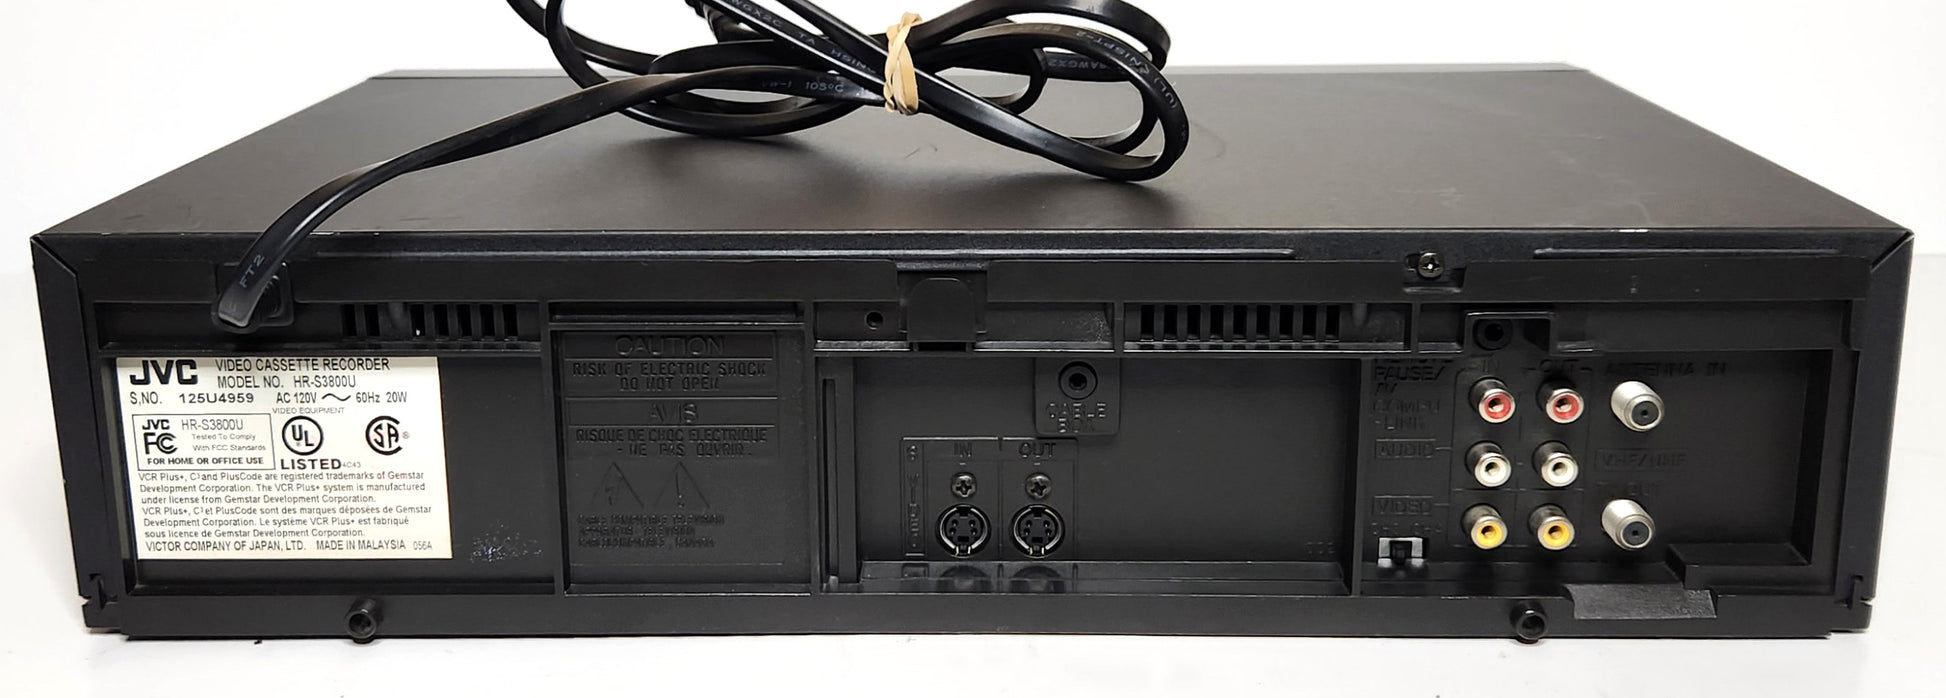 JVC HR-S3800U VCR, 4-Head Hi-Fi Stereo, Super VHS - Rear